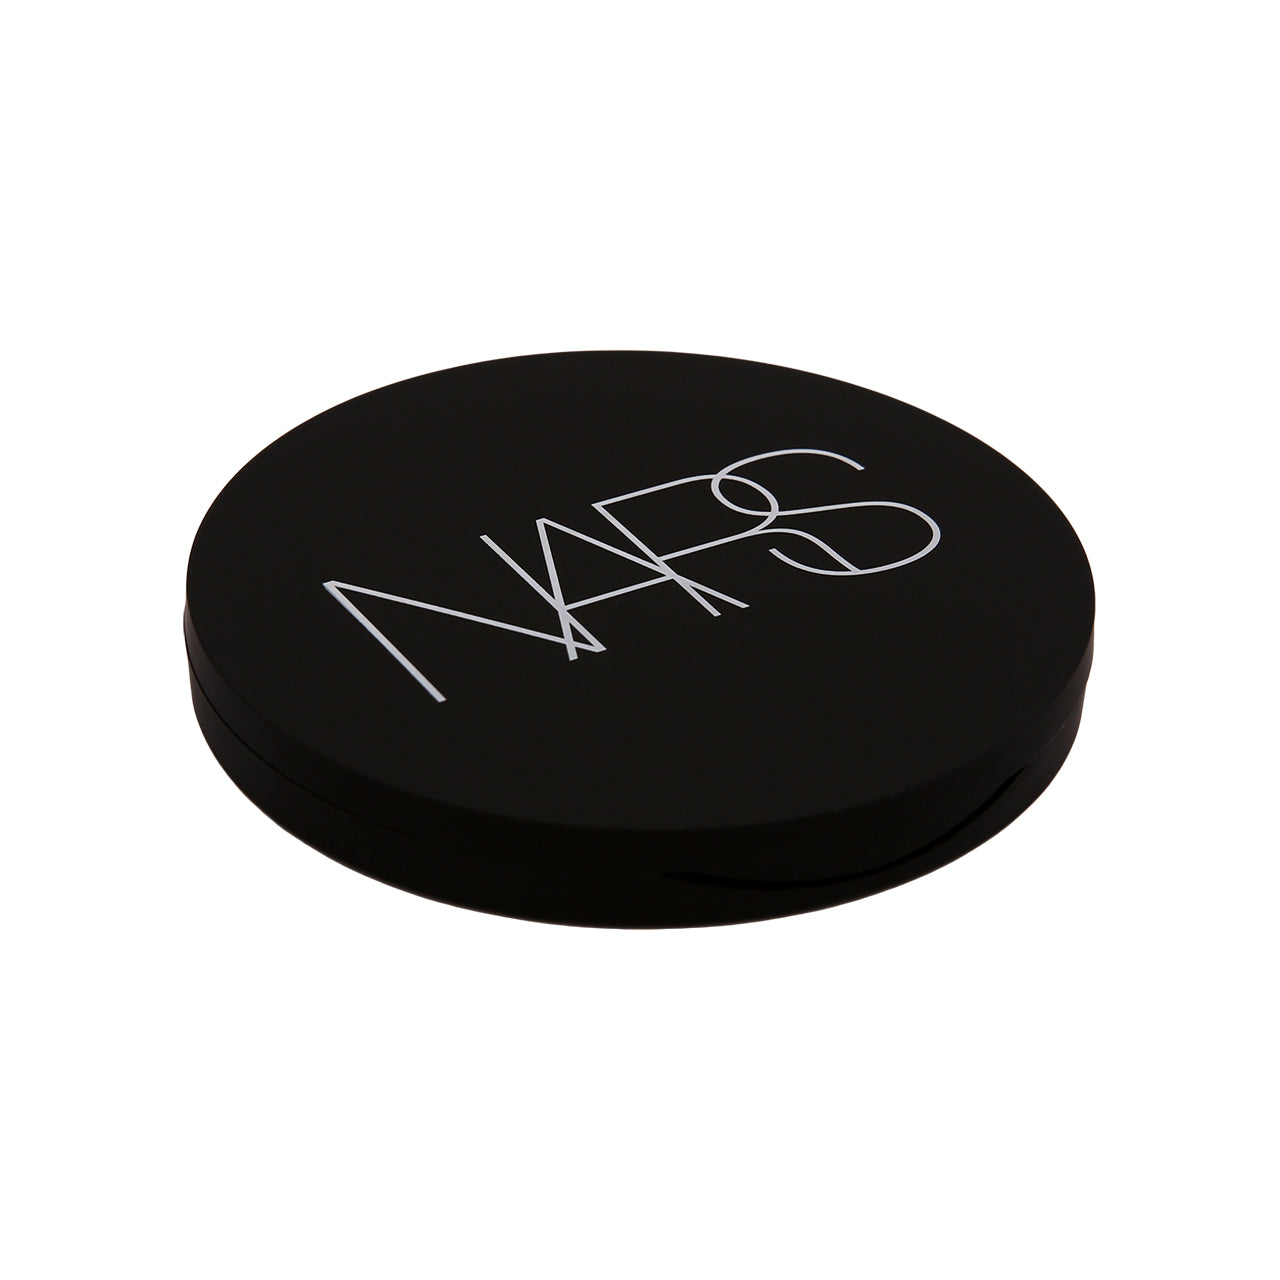 NARS Soft Matte Advanced Perfecting Powder (#Creek) 9g | Sasa Global eShop